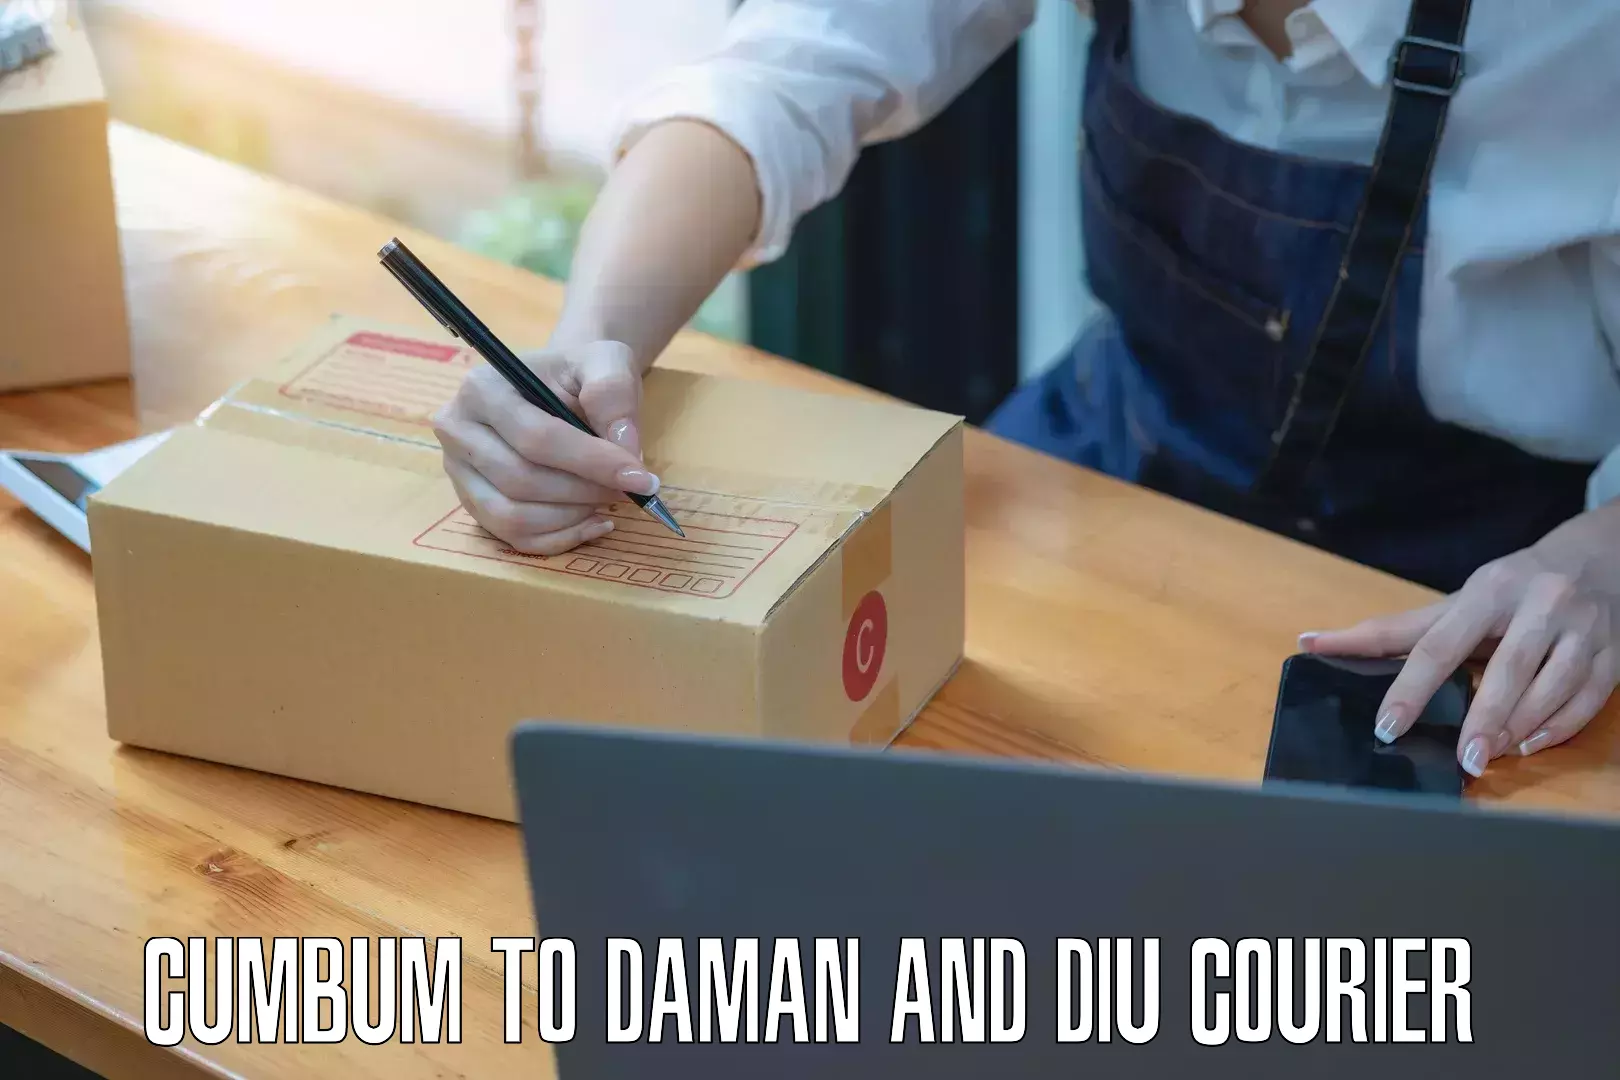 Courier service innovation Cumbum to Daman